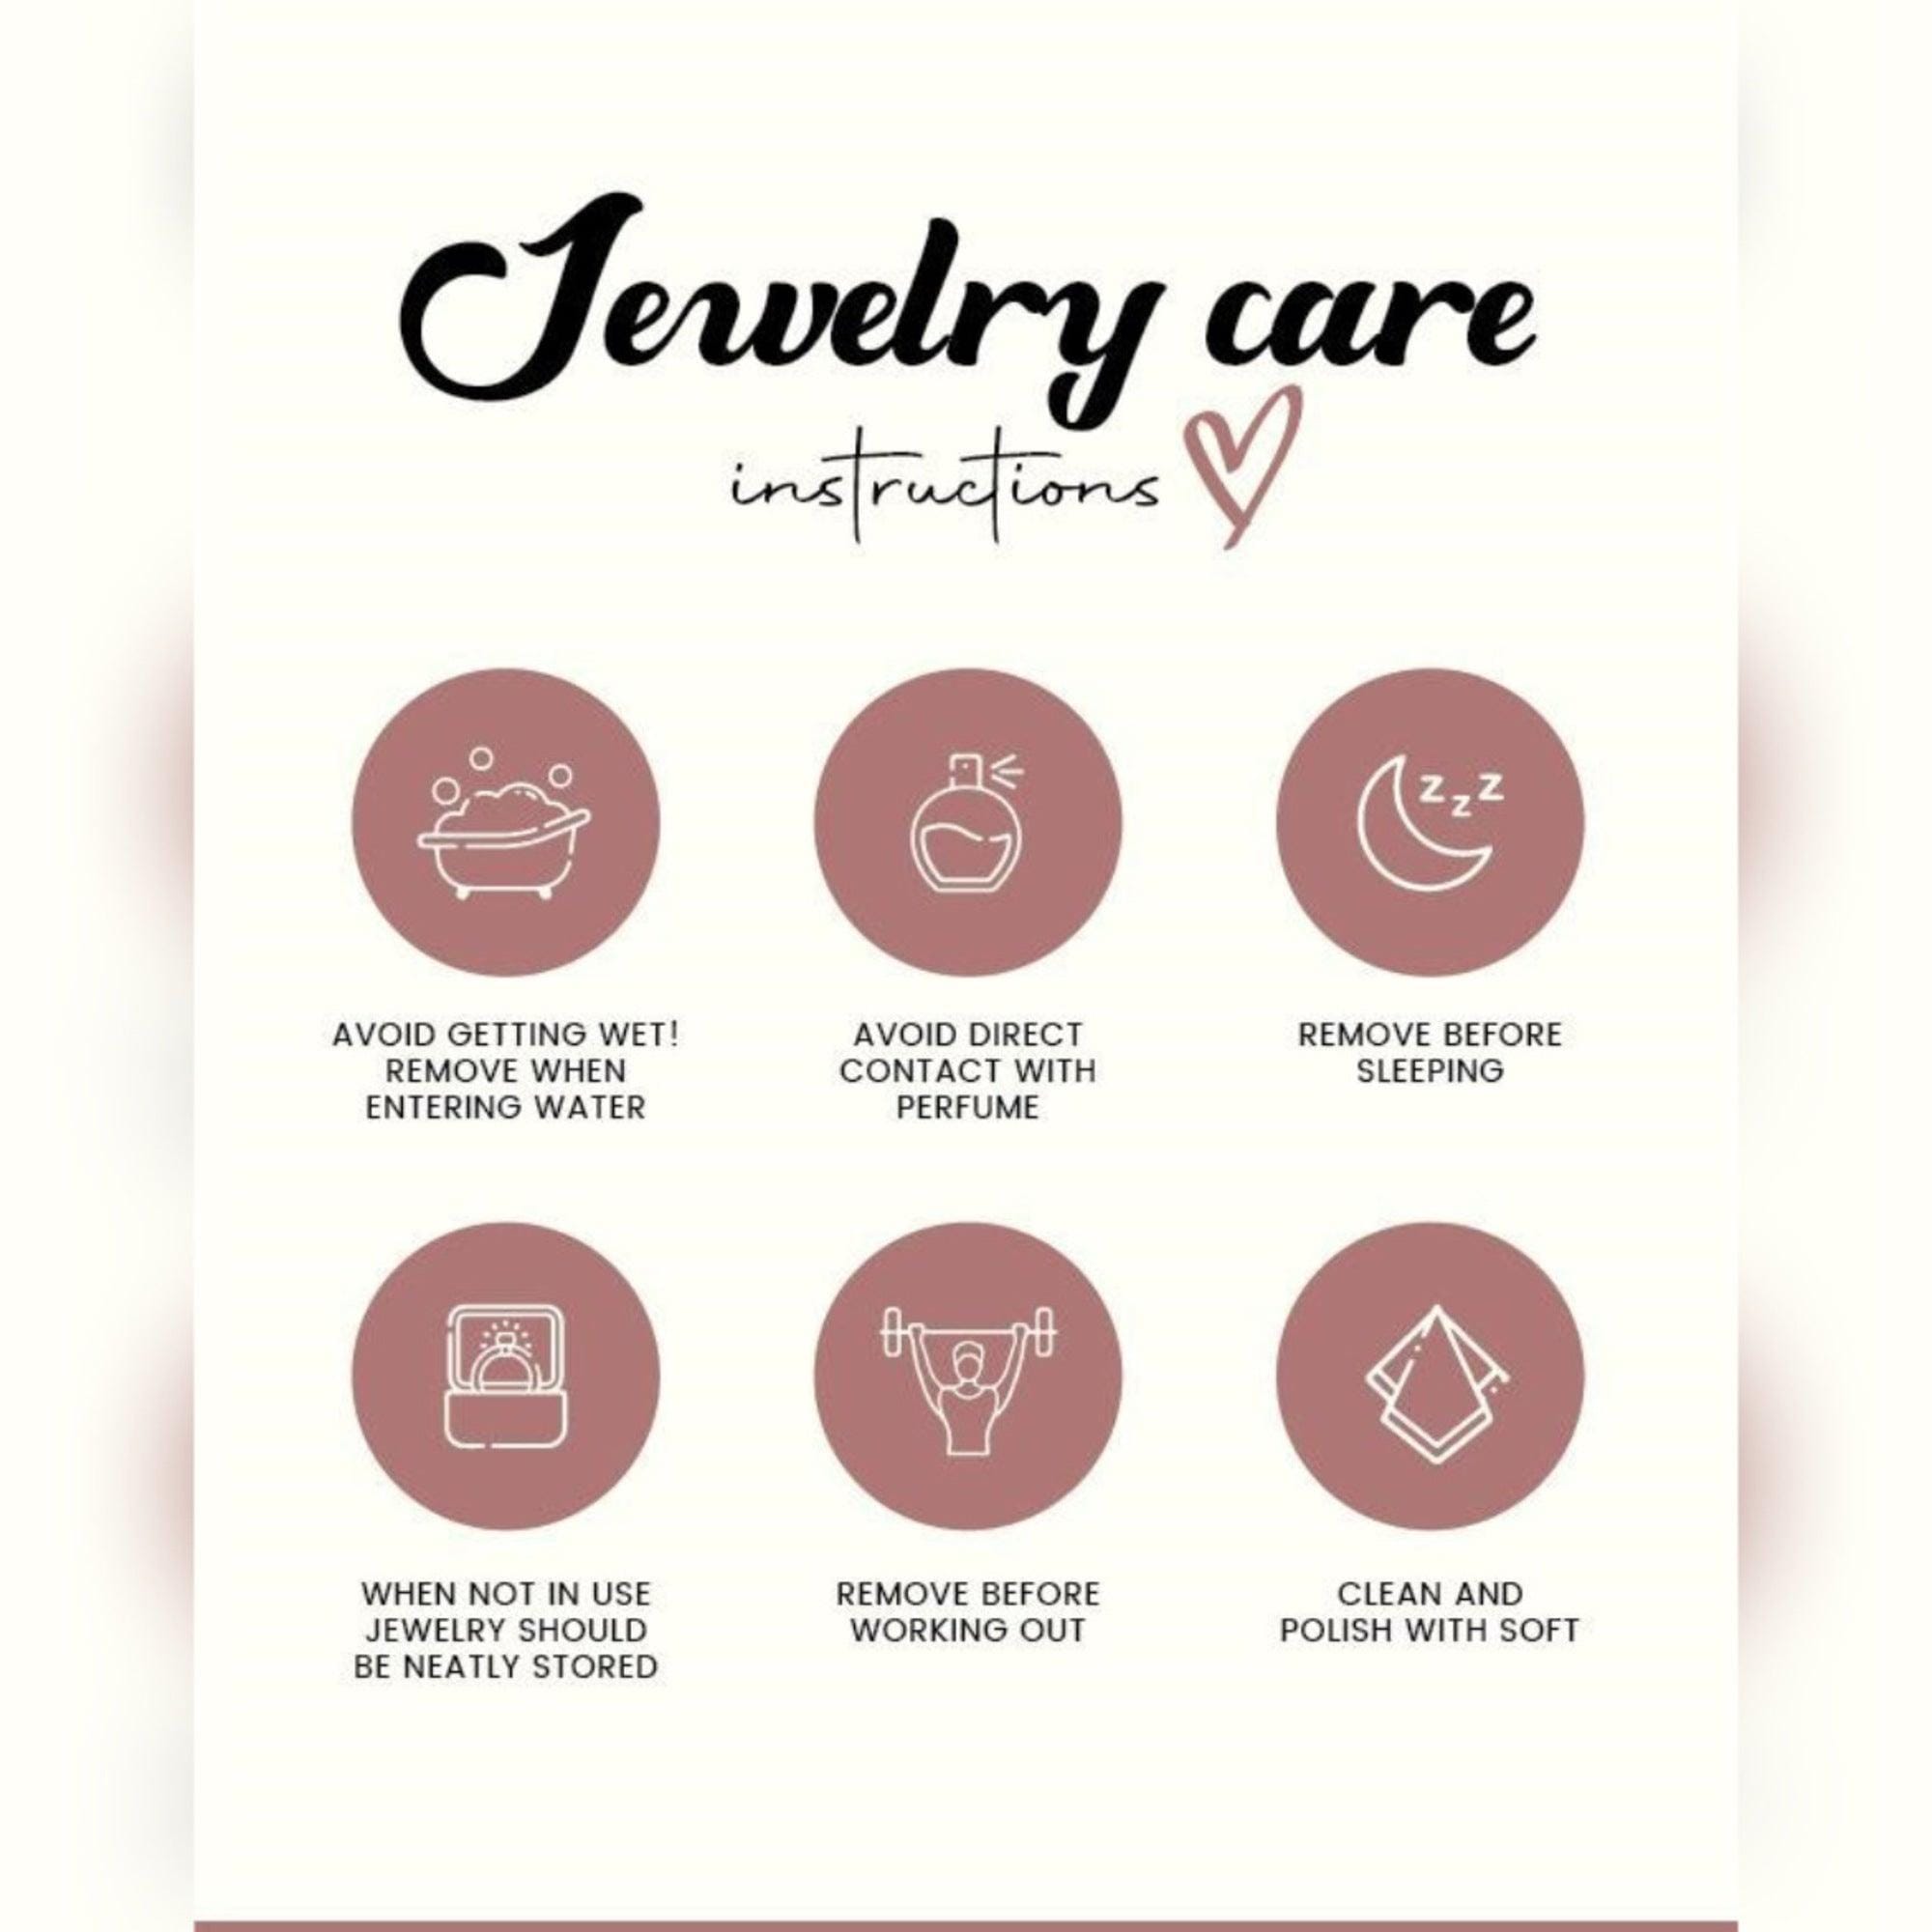 Natural Dendritic Opal Pear Shape Calibrated | Cabochon Gemstone Healing Crystal | Raw Gemstone for Jewelry making | Unique Gemstone Cabochon SB-80 - Silverhubjewels